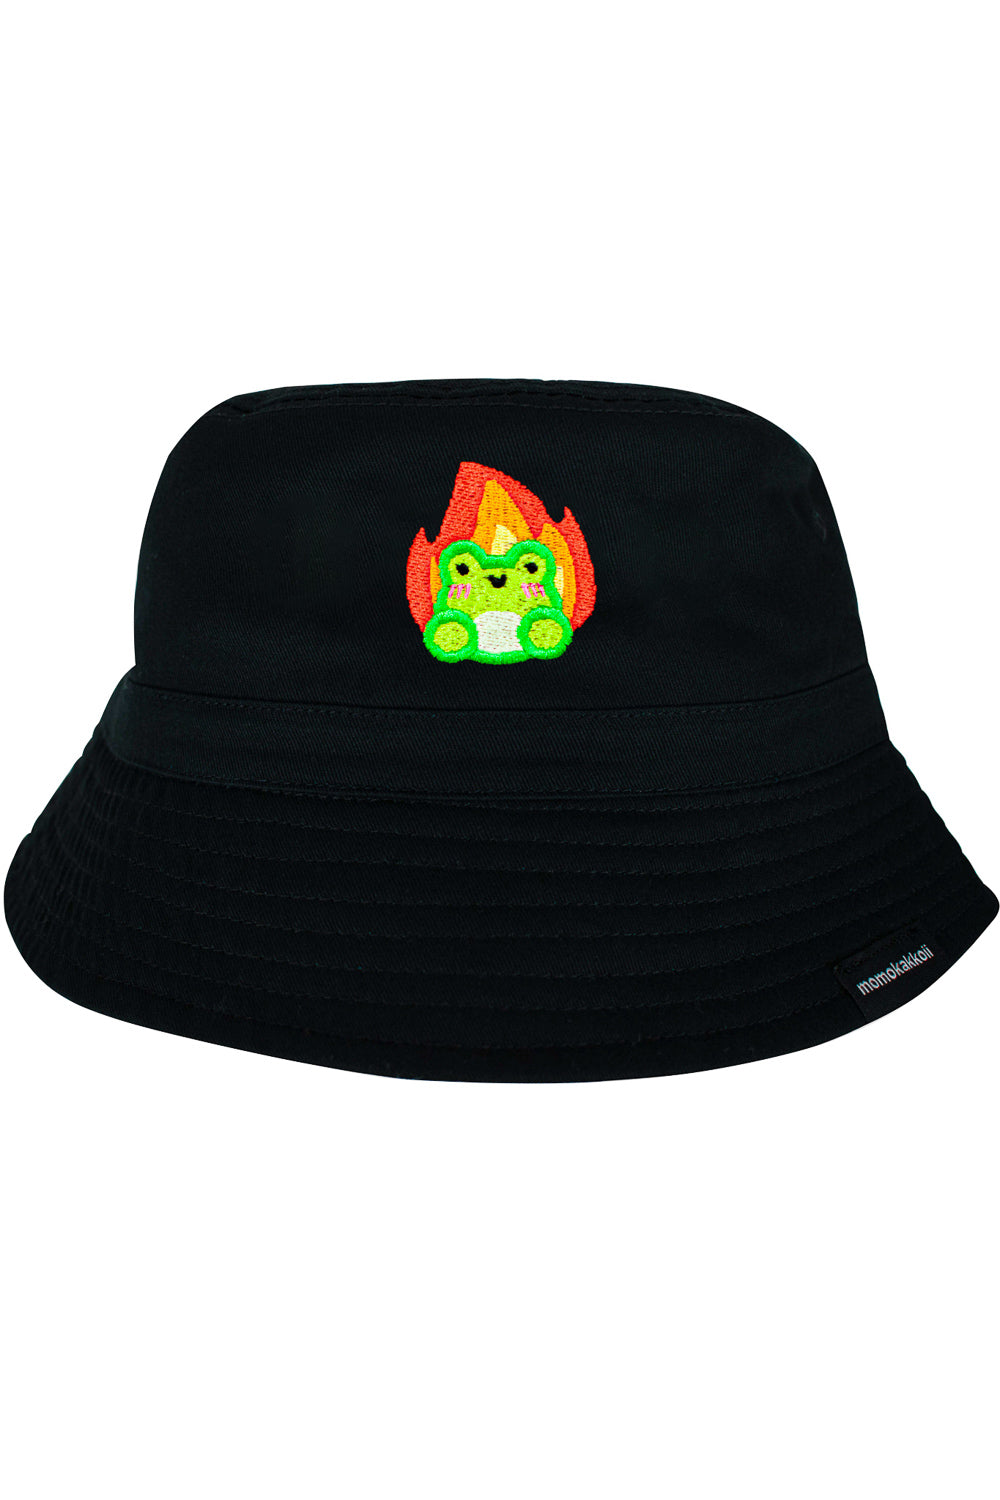 Albert In Flames Embroidered Bucket Hat